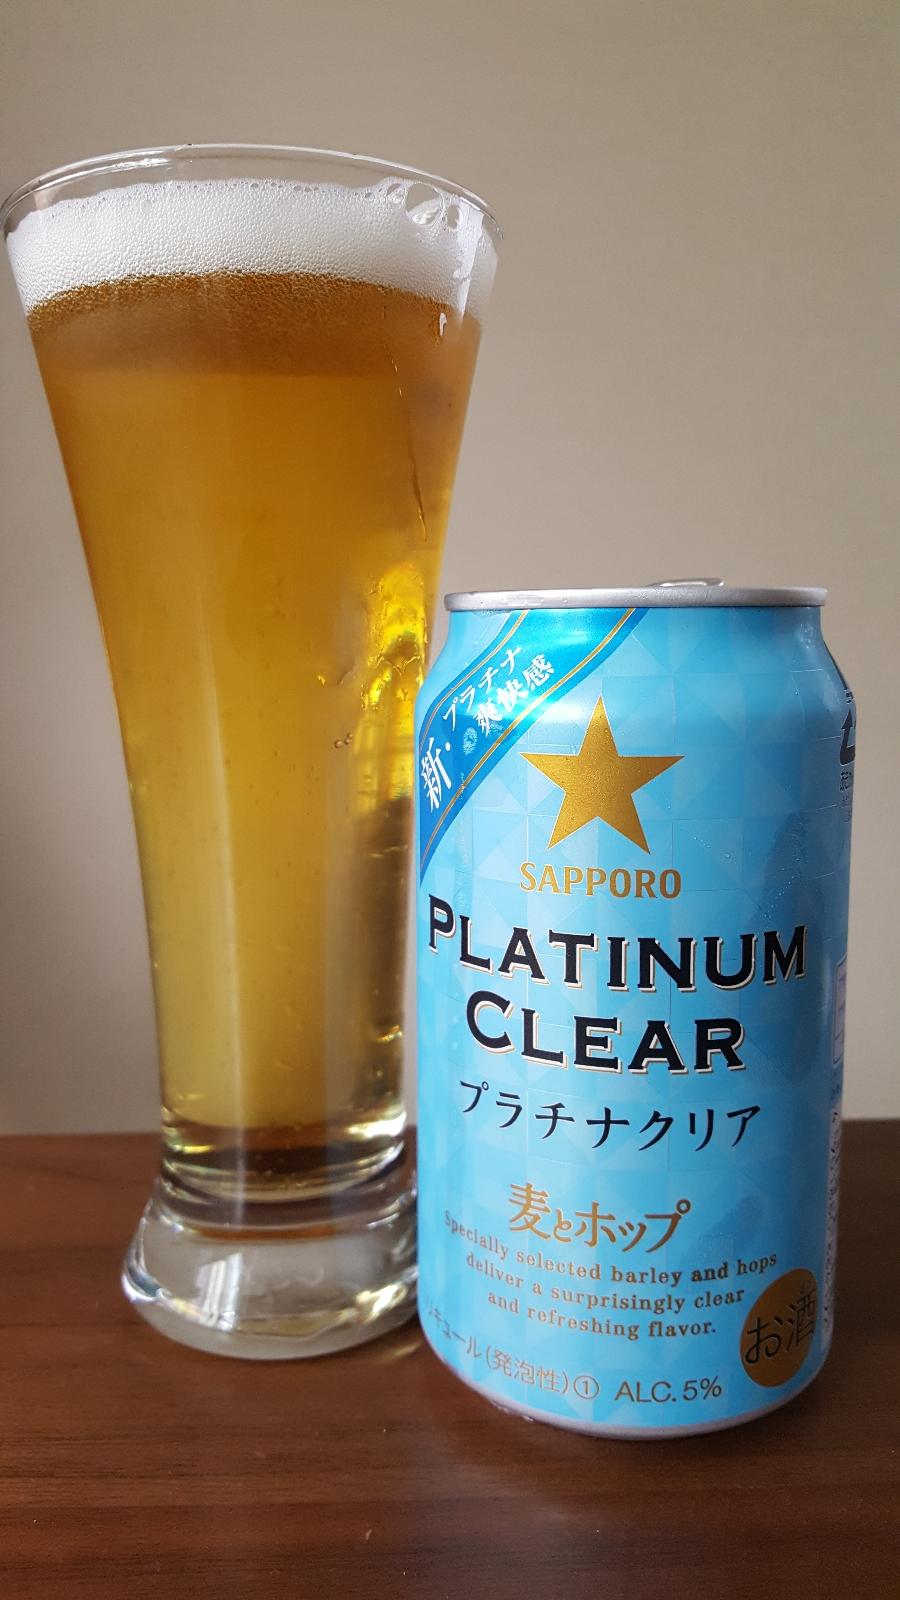 Sapporo Platinum Clear